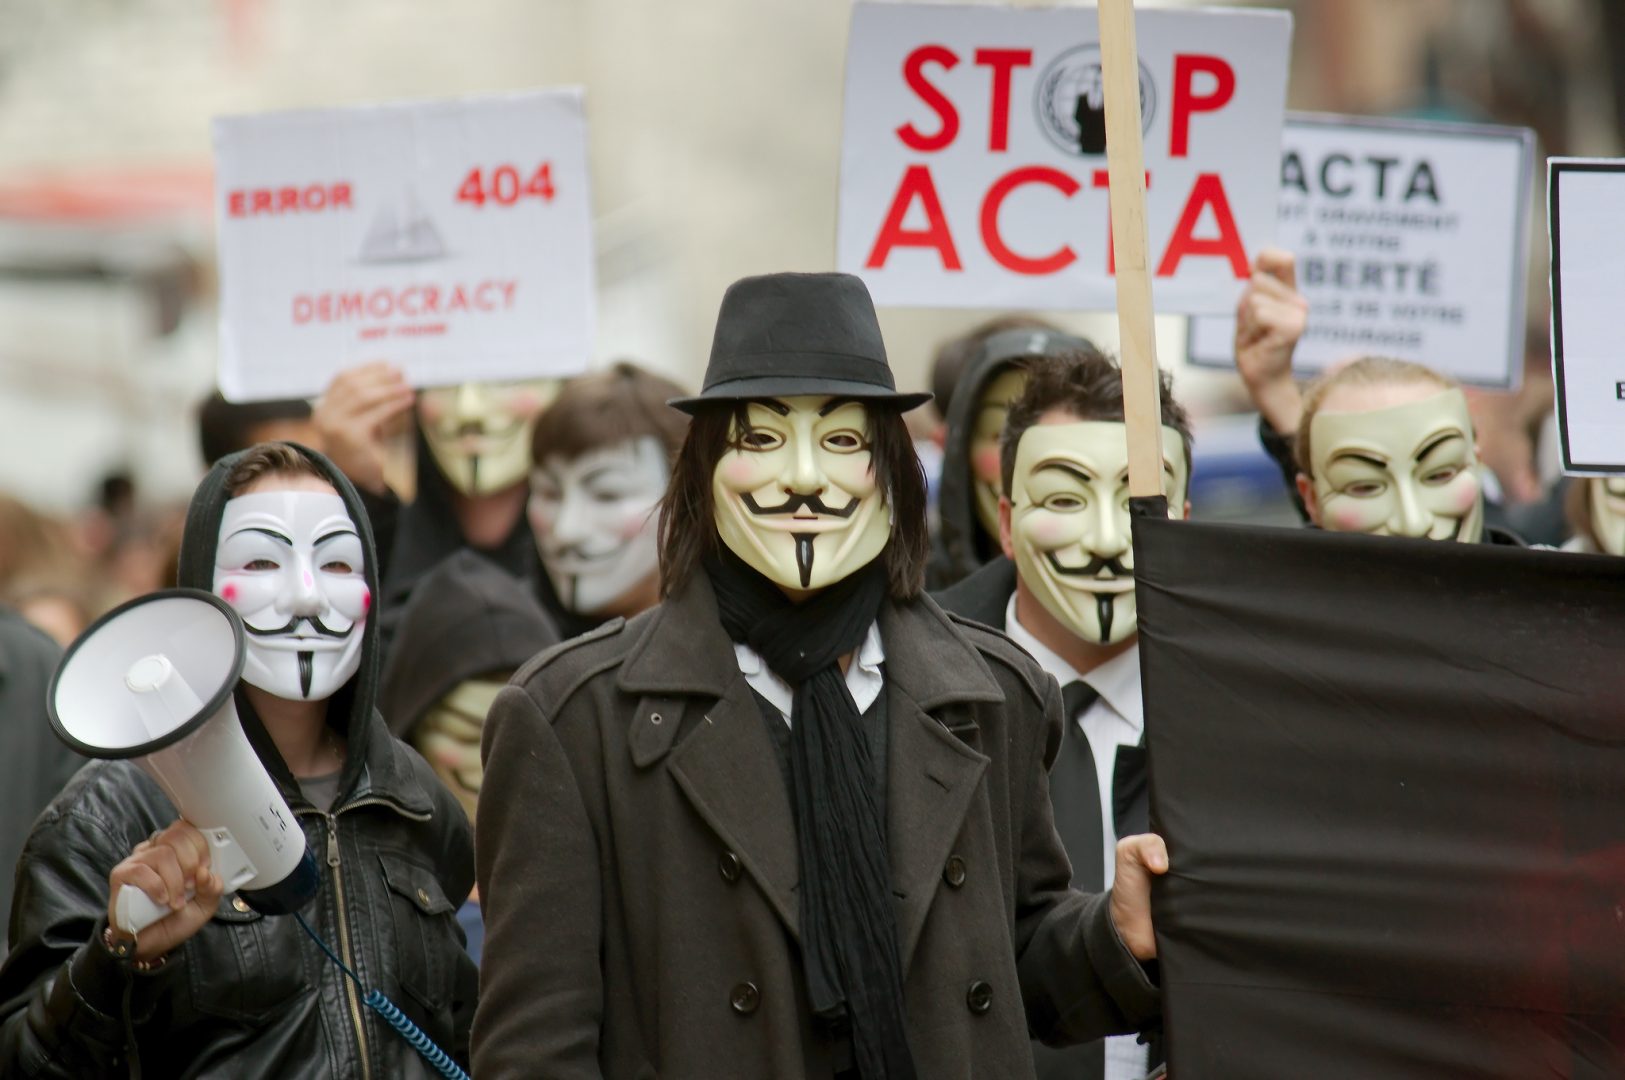 ACTA/Fot. Frédéric BISSON/CC BY-SA 2.0/Flickr